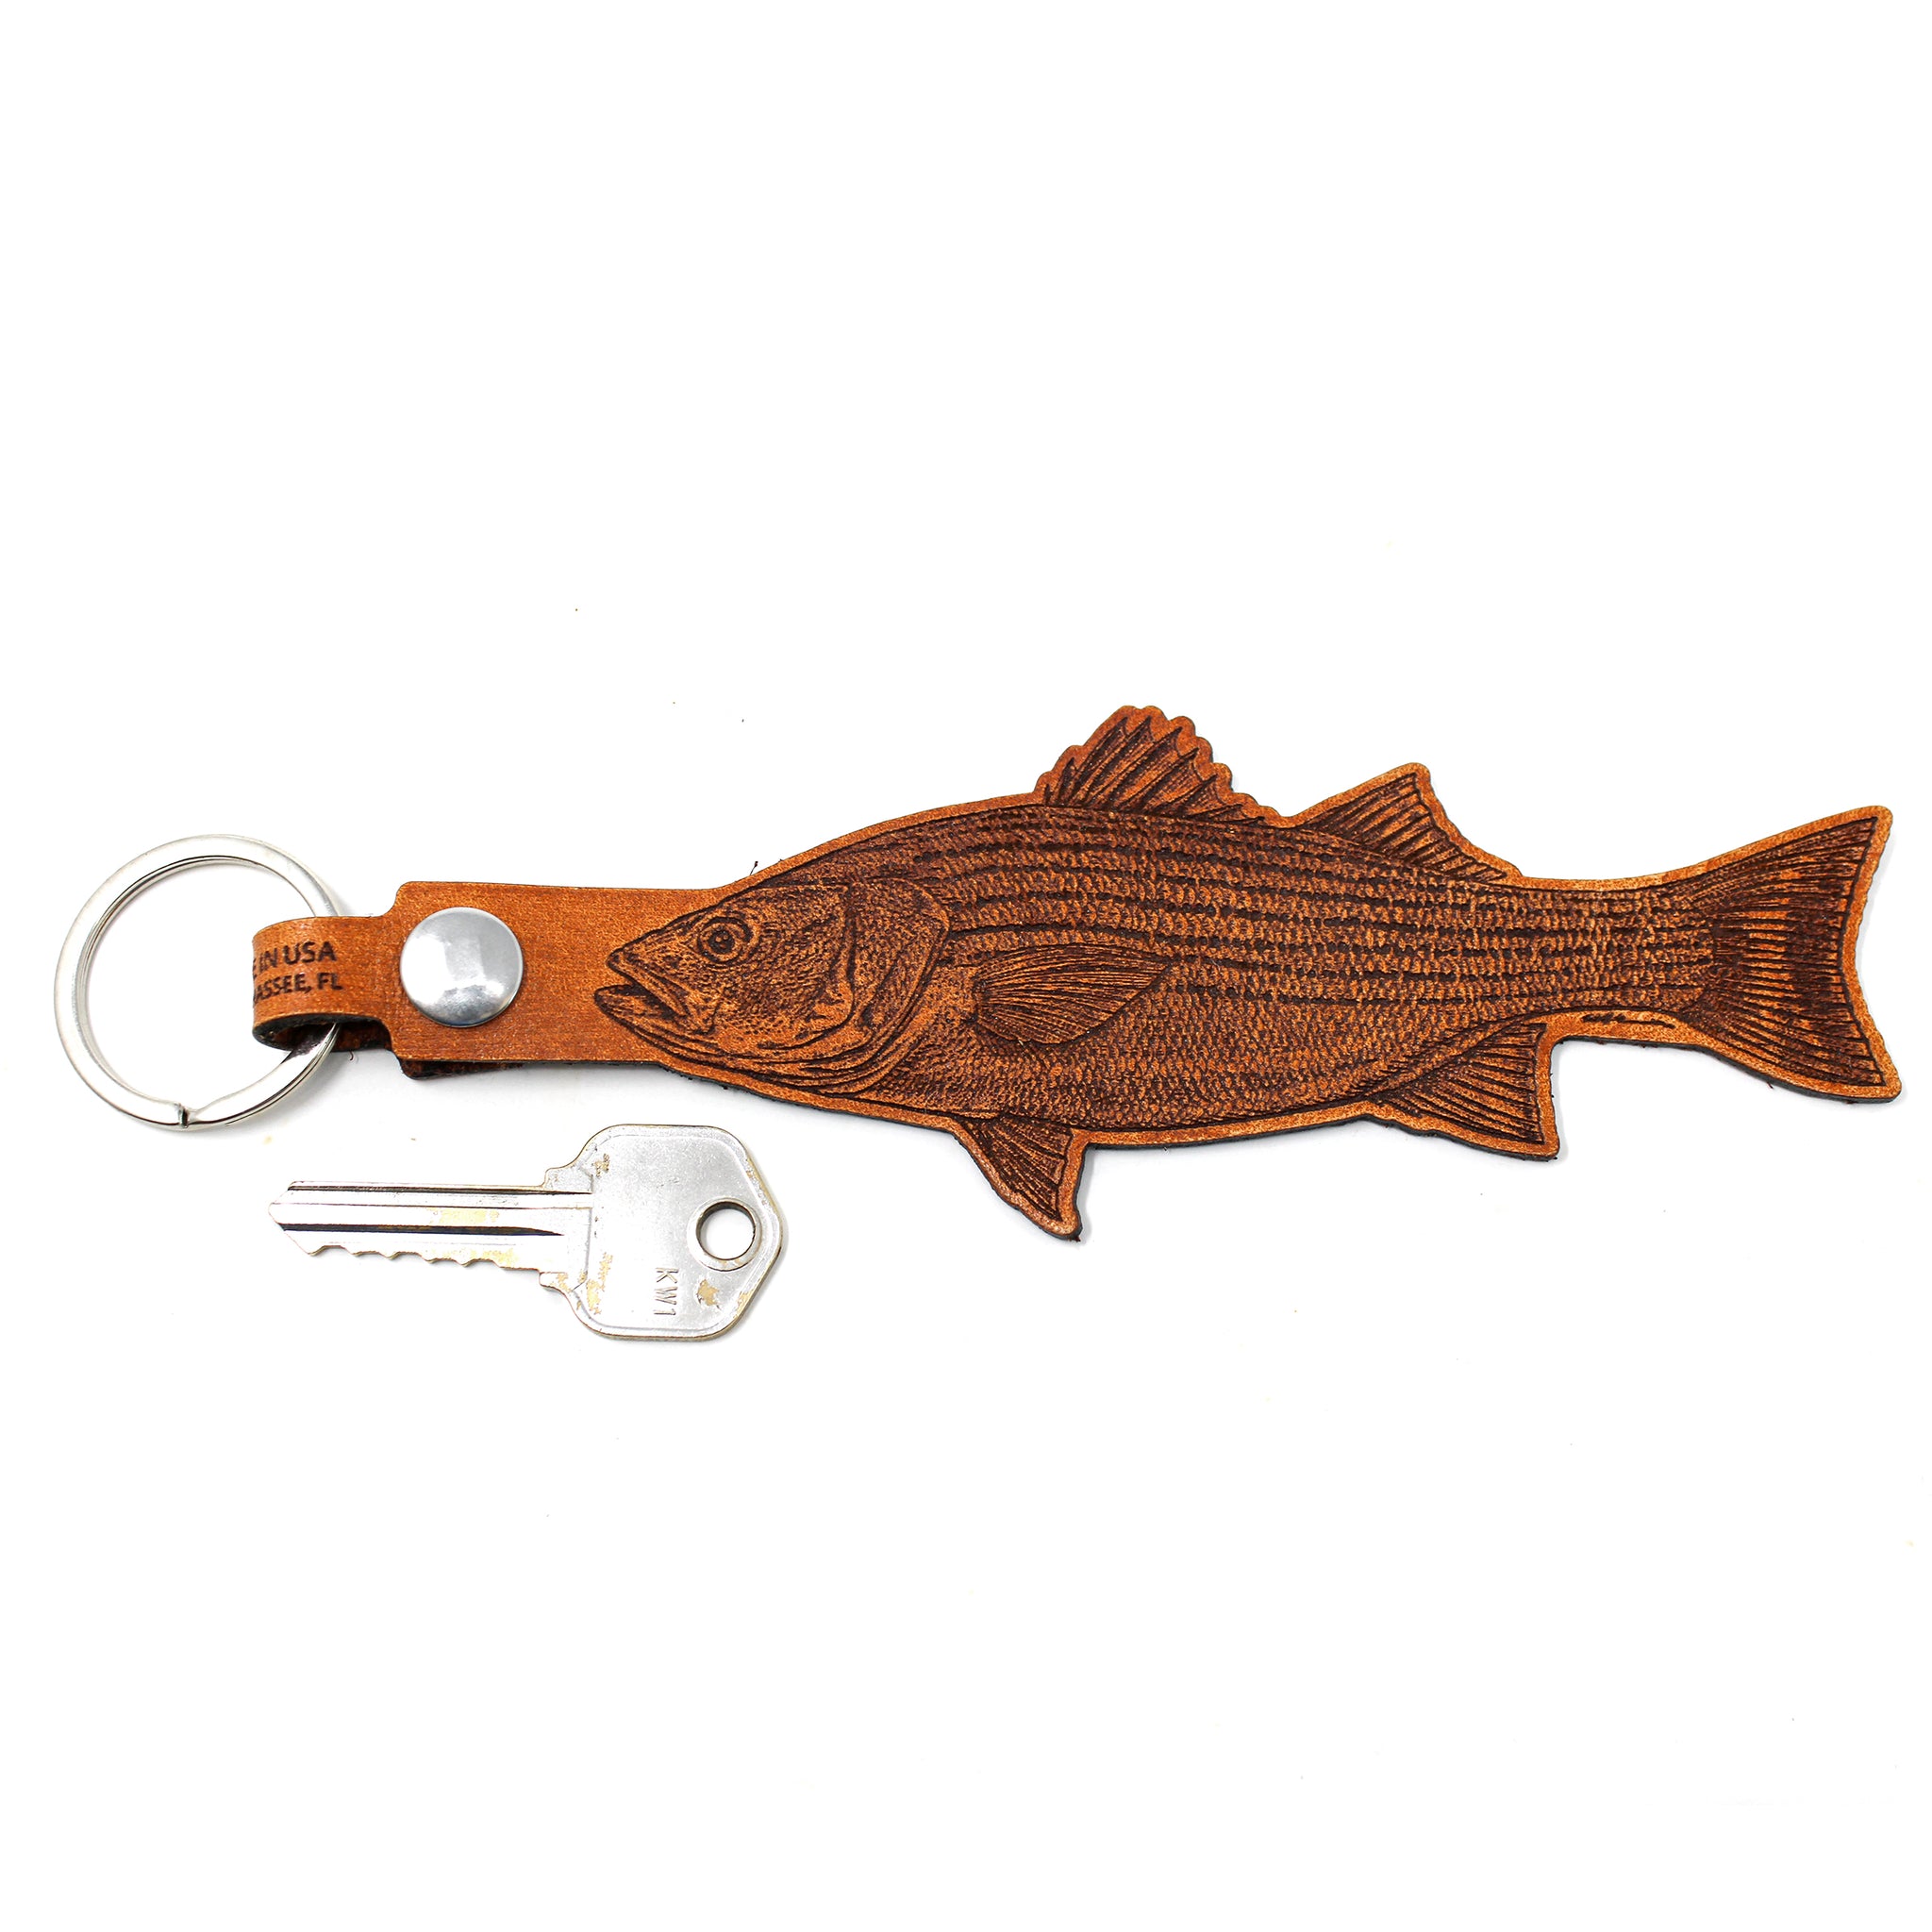 Leather Keychain - Large Striped Sea Bass Keychain